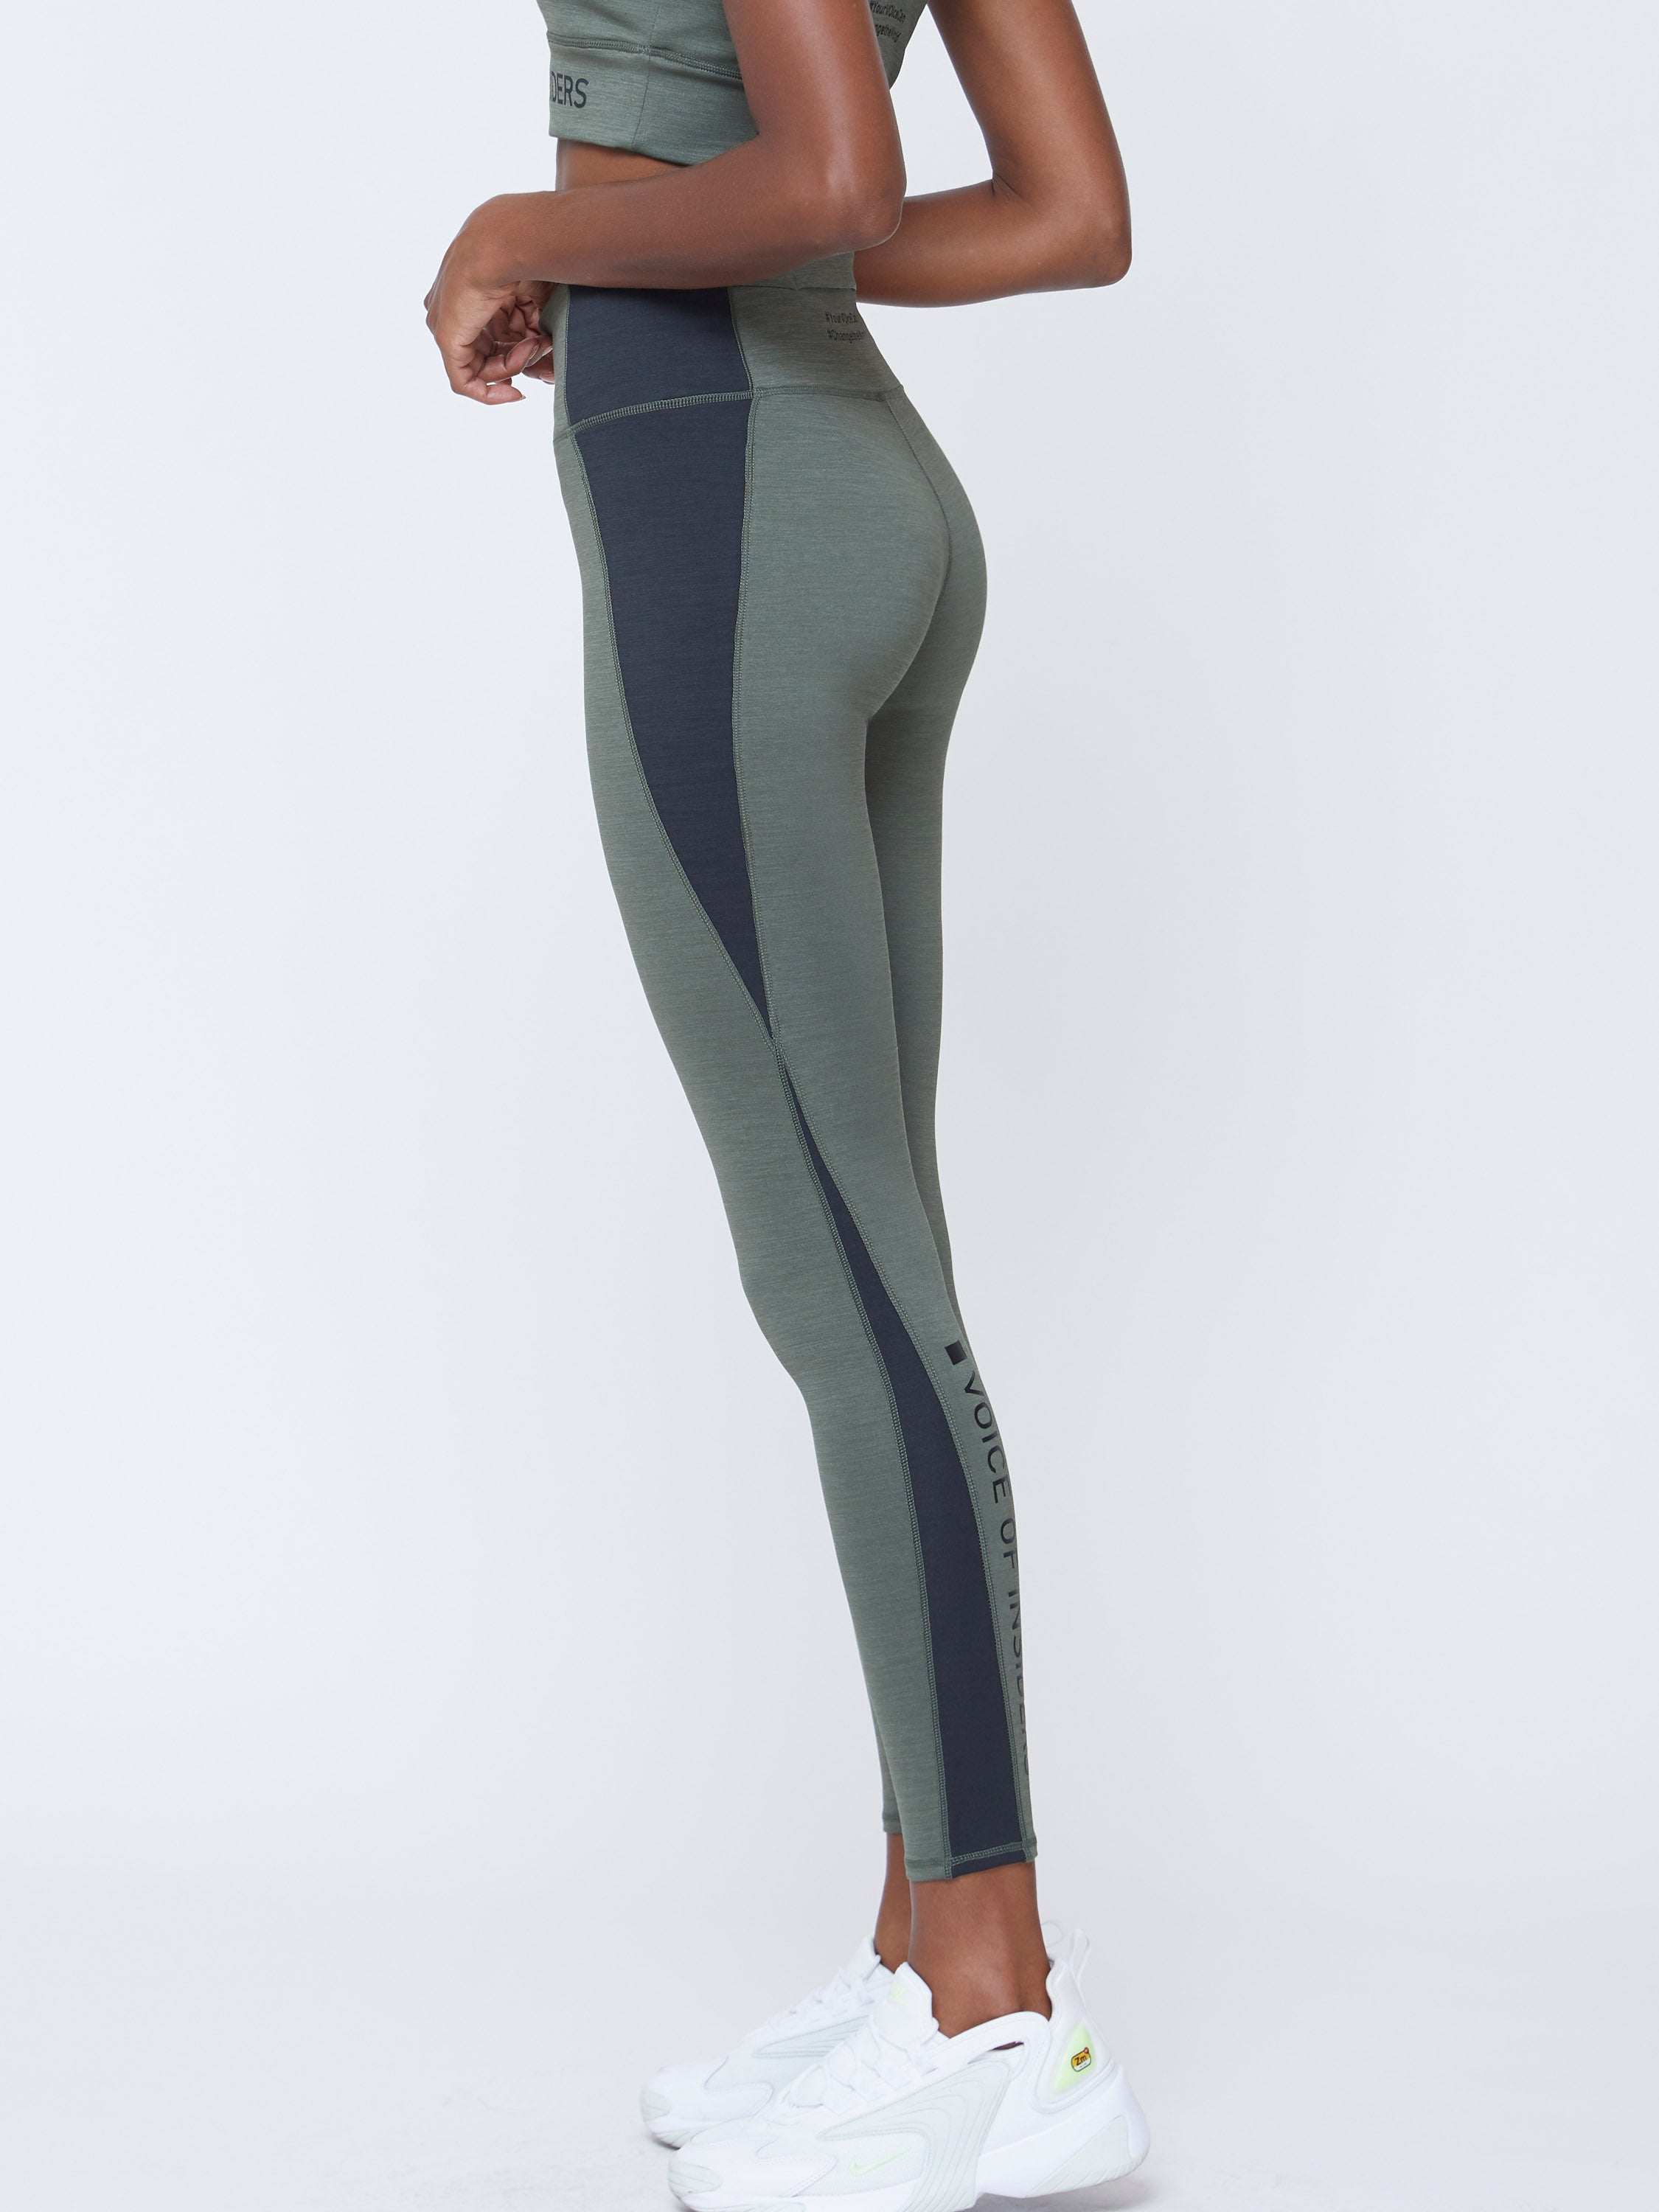 OV OUTDOOR VOICES pants Size XS womens yoga leggings gray color blocks